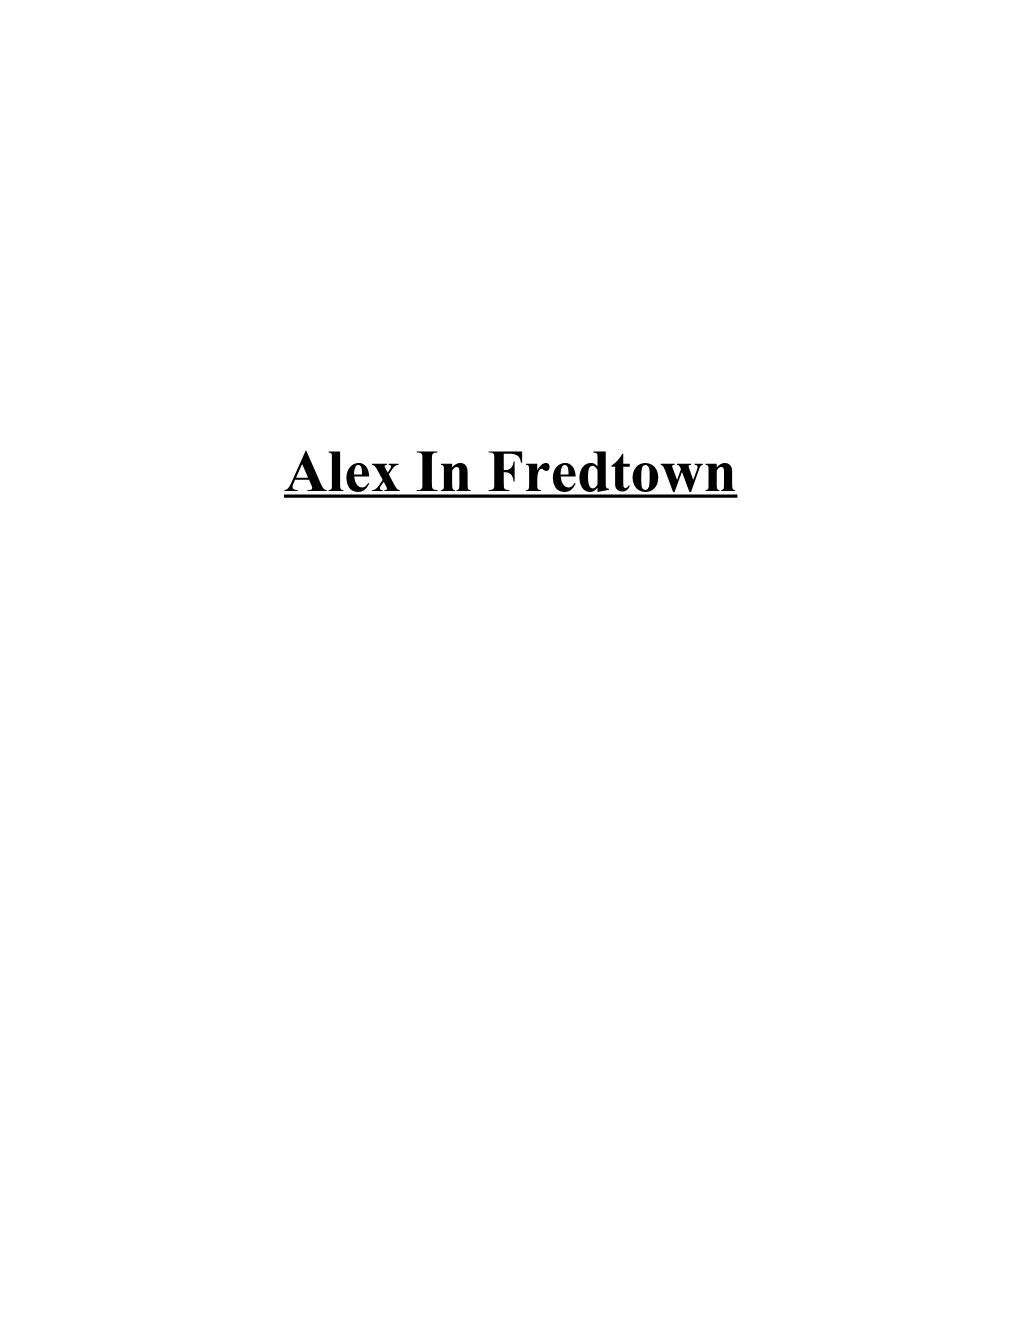 Alex in Fredtown